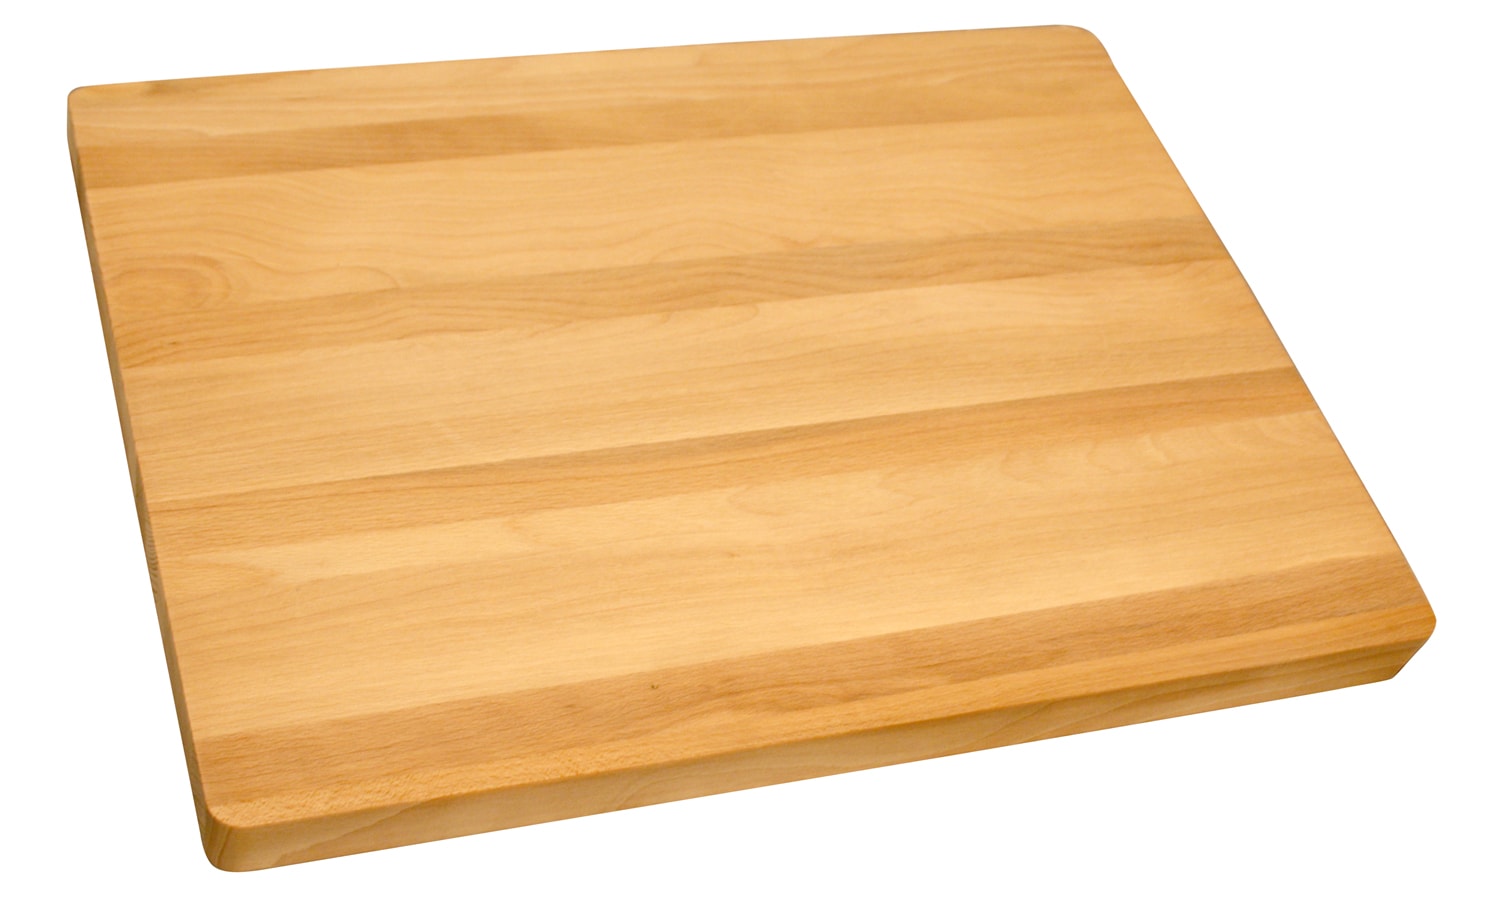 Empty rectangular wooden kitchen cutting board with stone insert